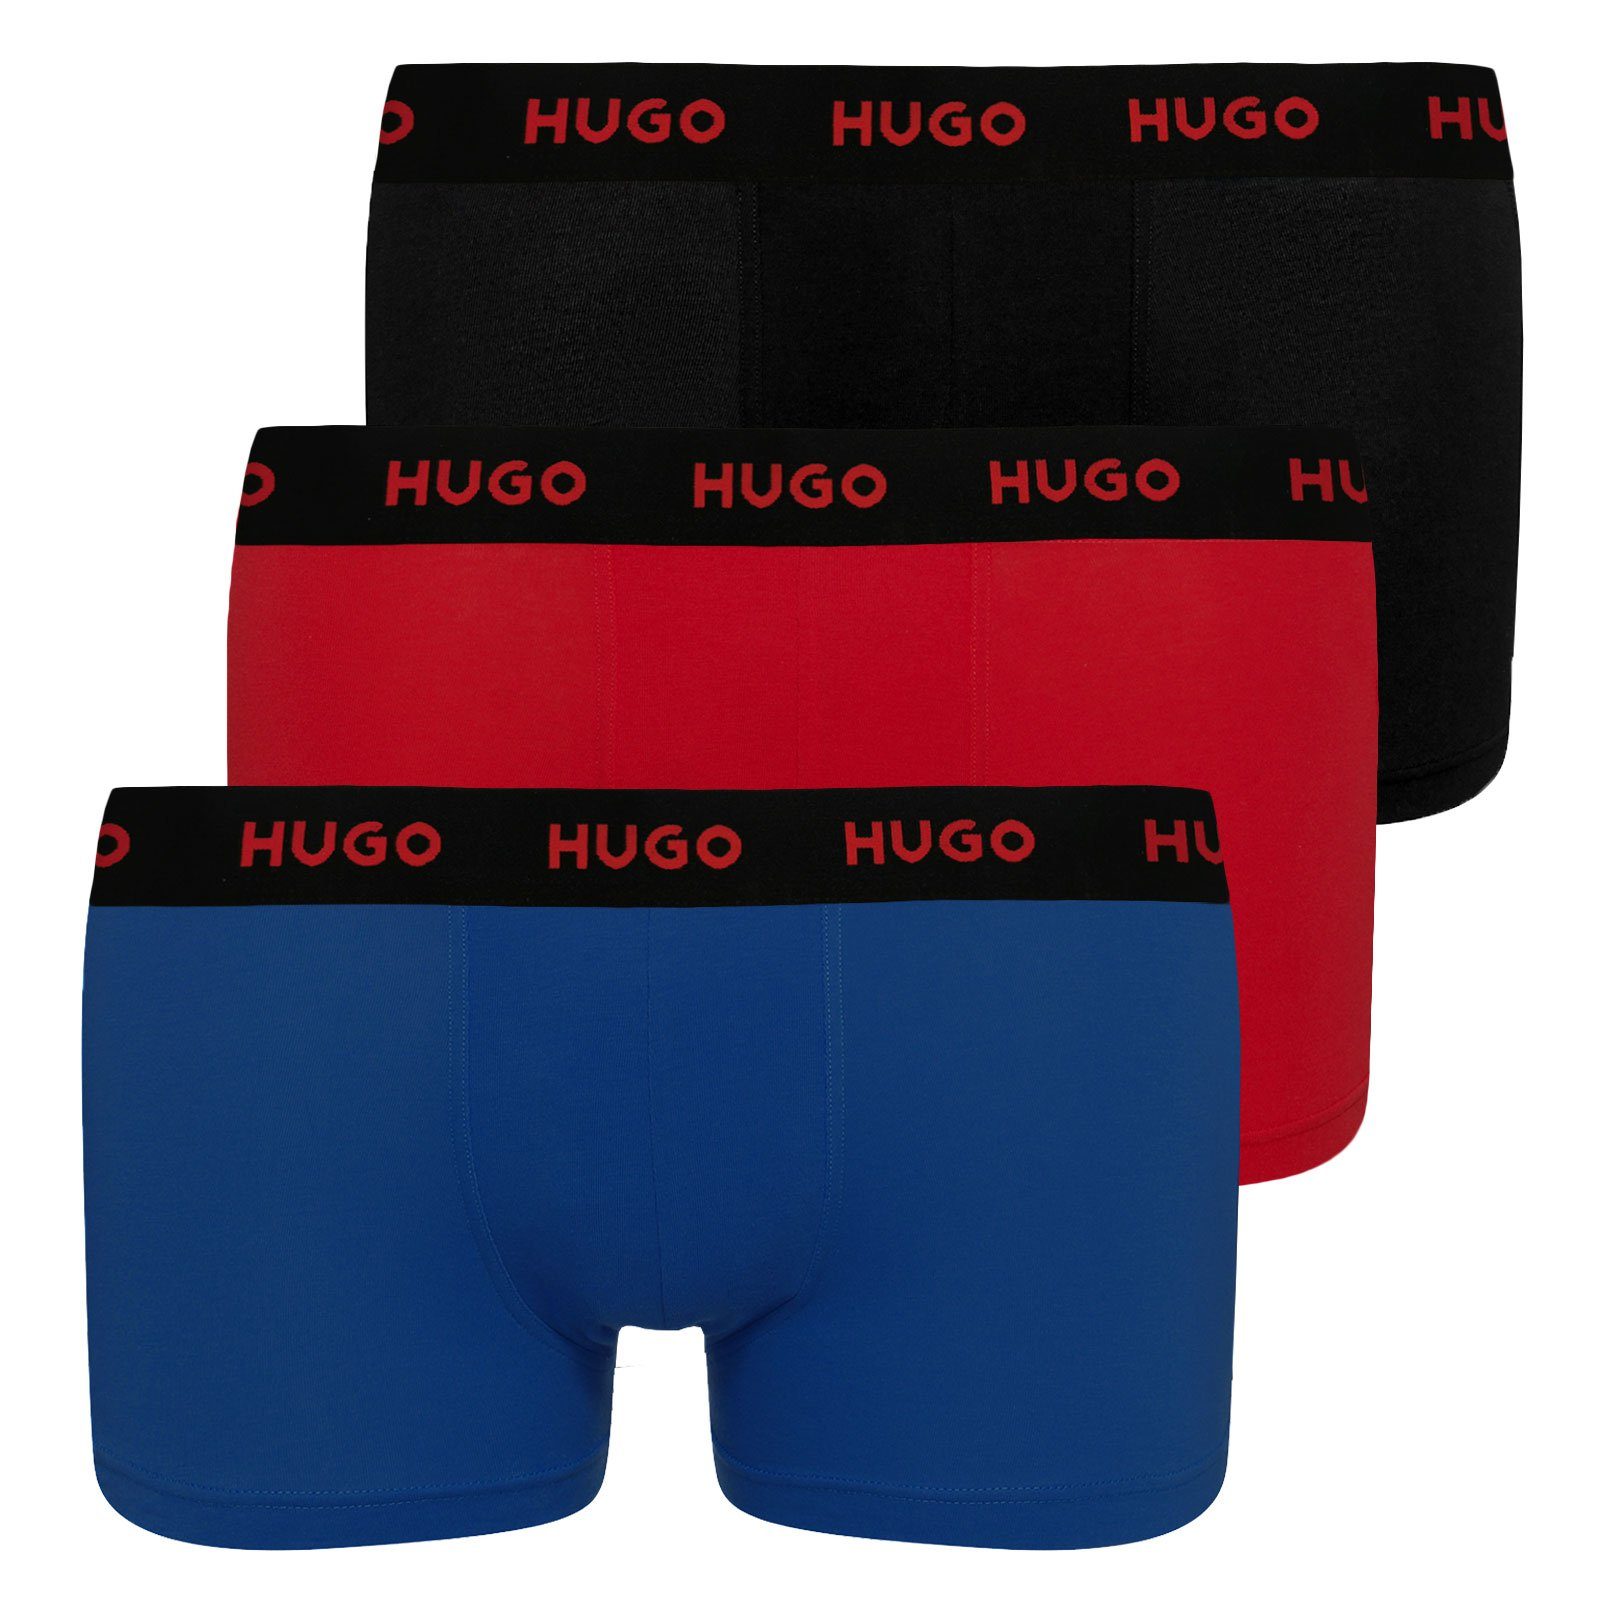 HUGO Trunk Triplet Pack (3-St., 3er Set) mit umlaufendem Markenschriftzug am Bund 971 black / red / blue